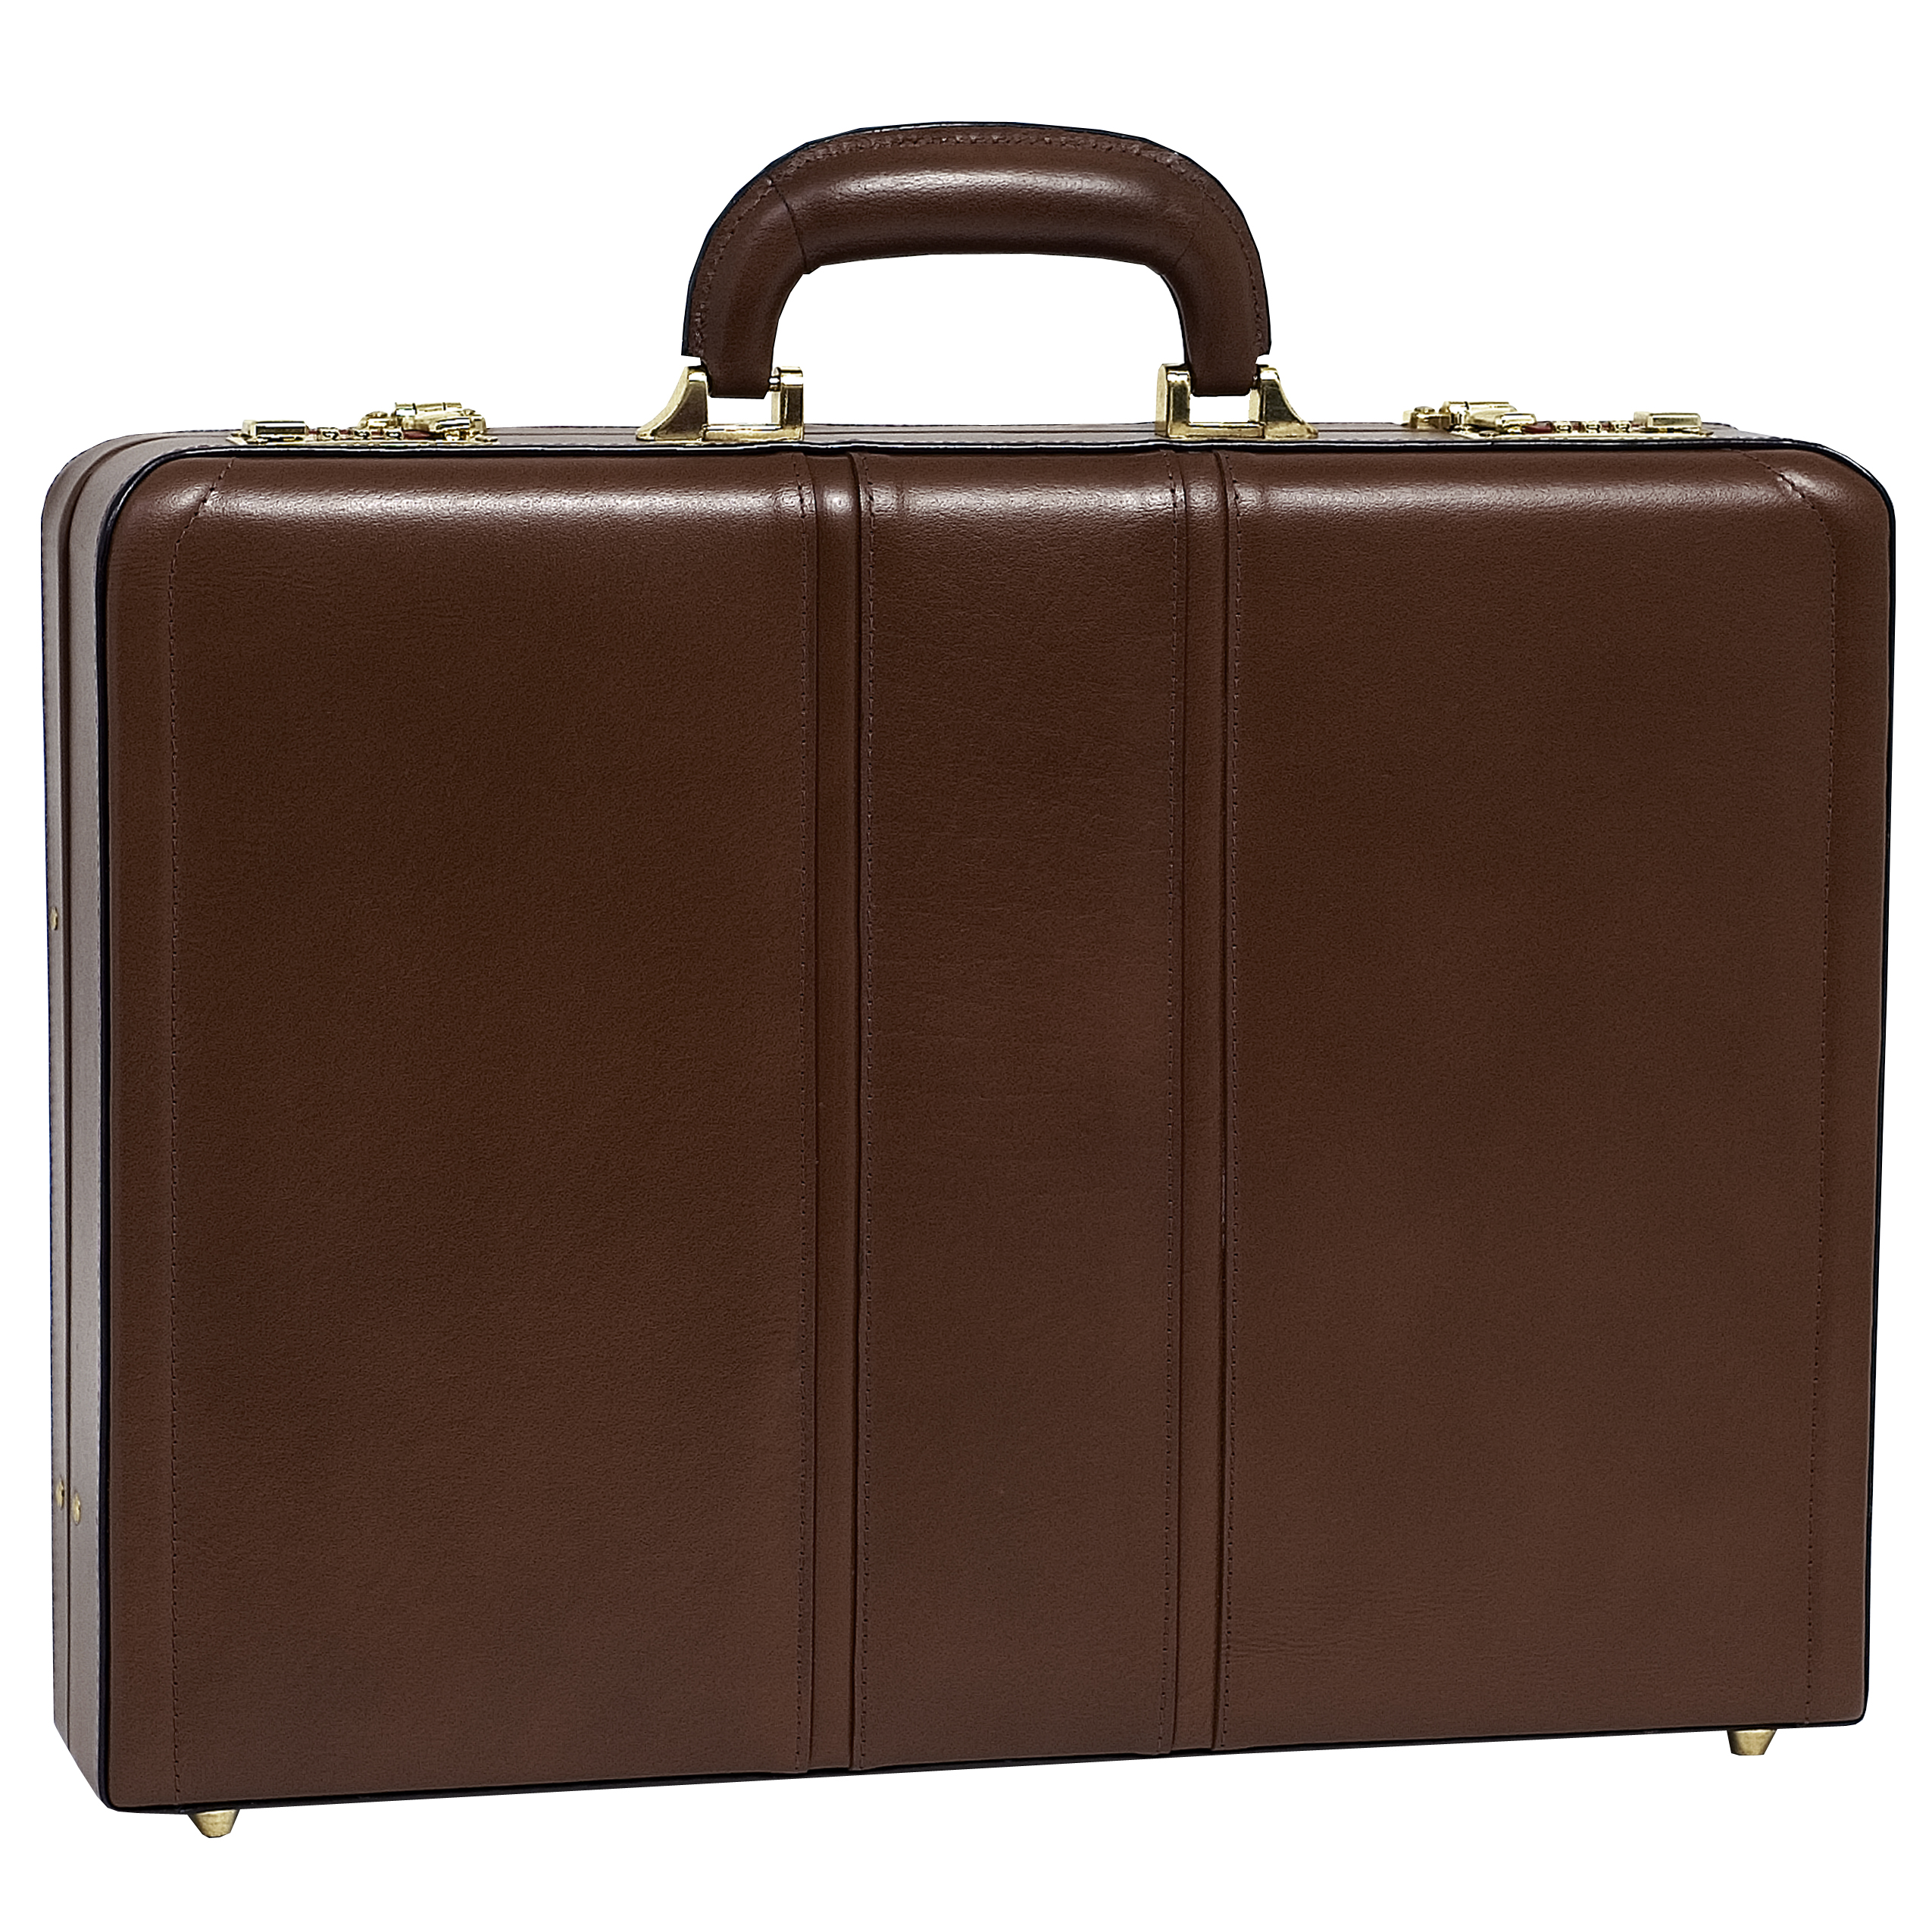 Mcklein 80434 Daley 80434- Brown Leather Attache Case